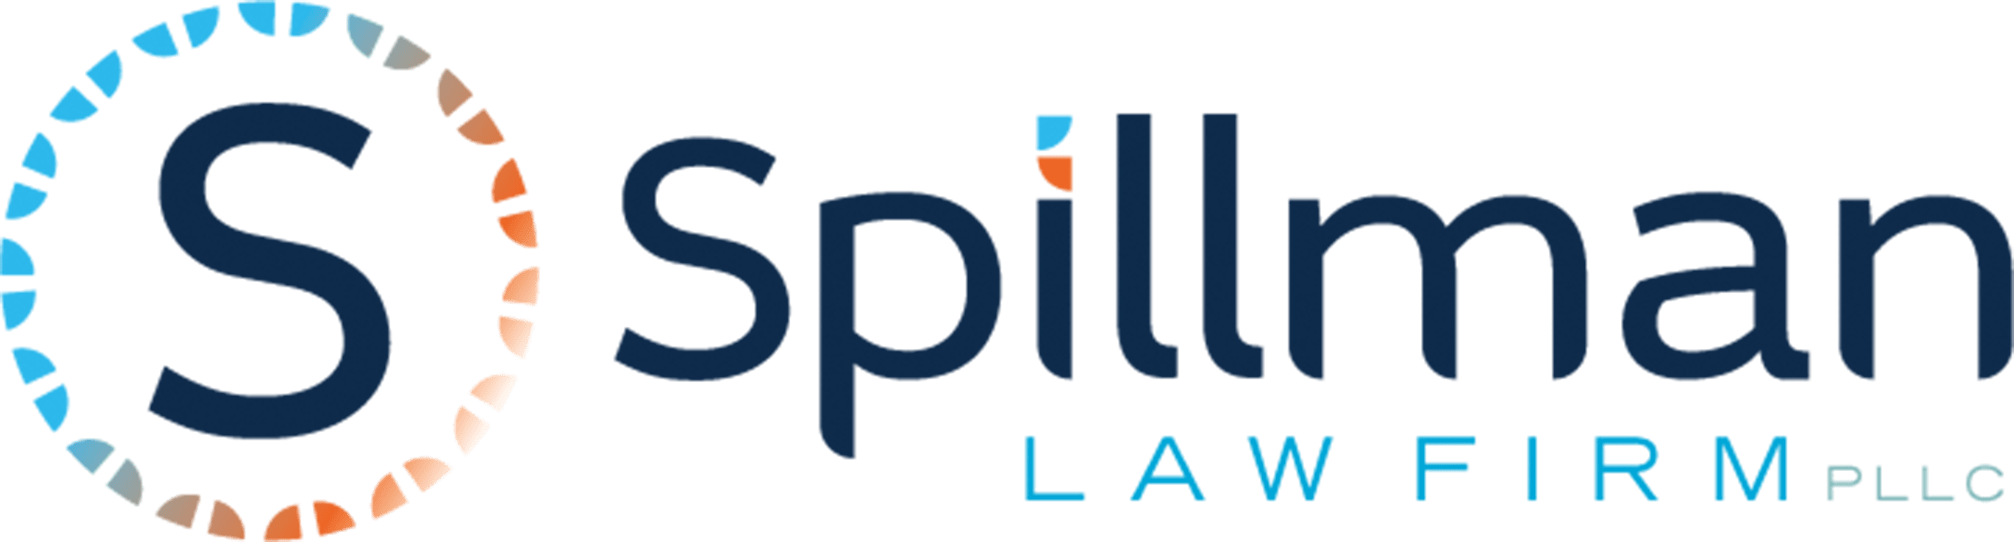 Spillman Law Firm - Law Firm (2014x542)